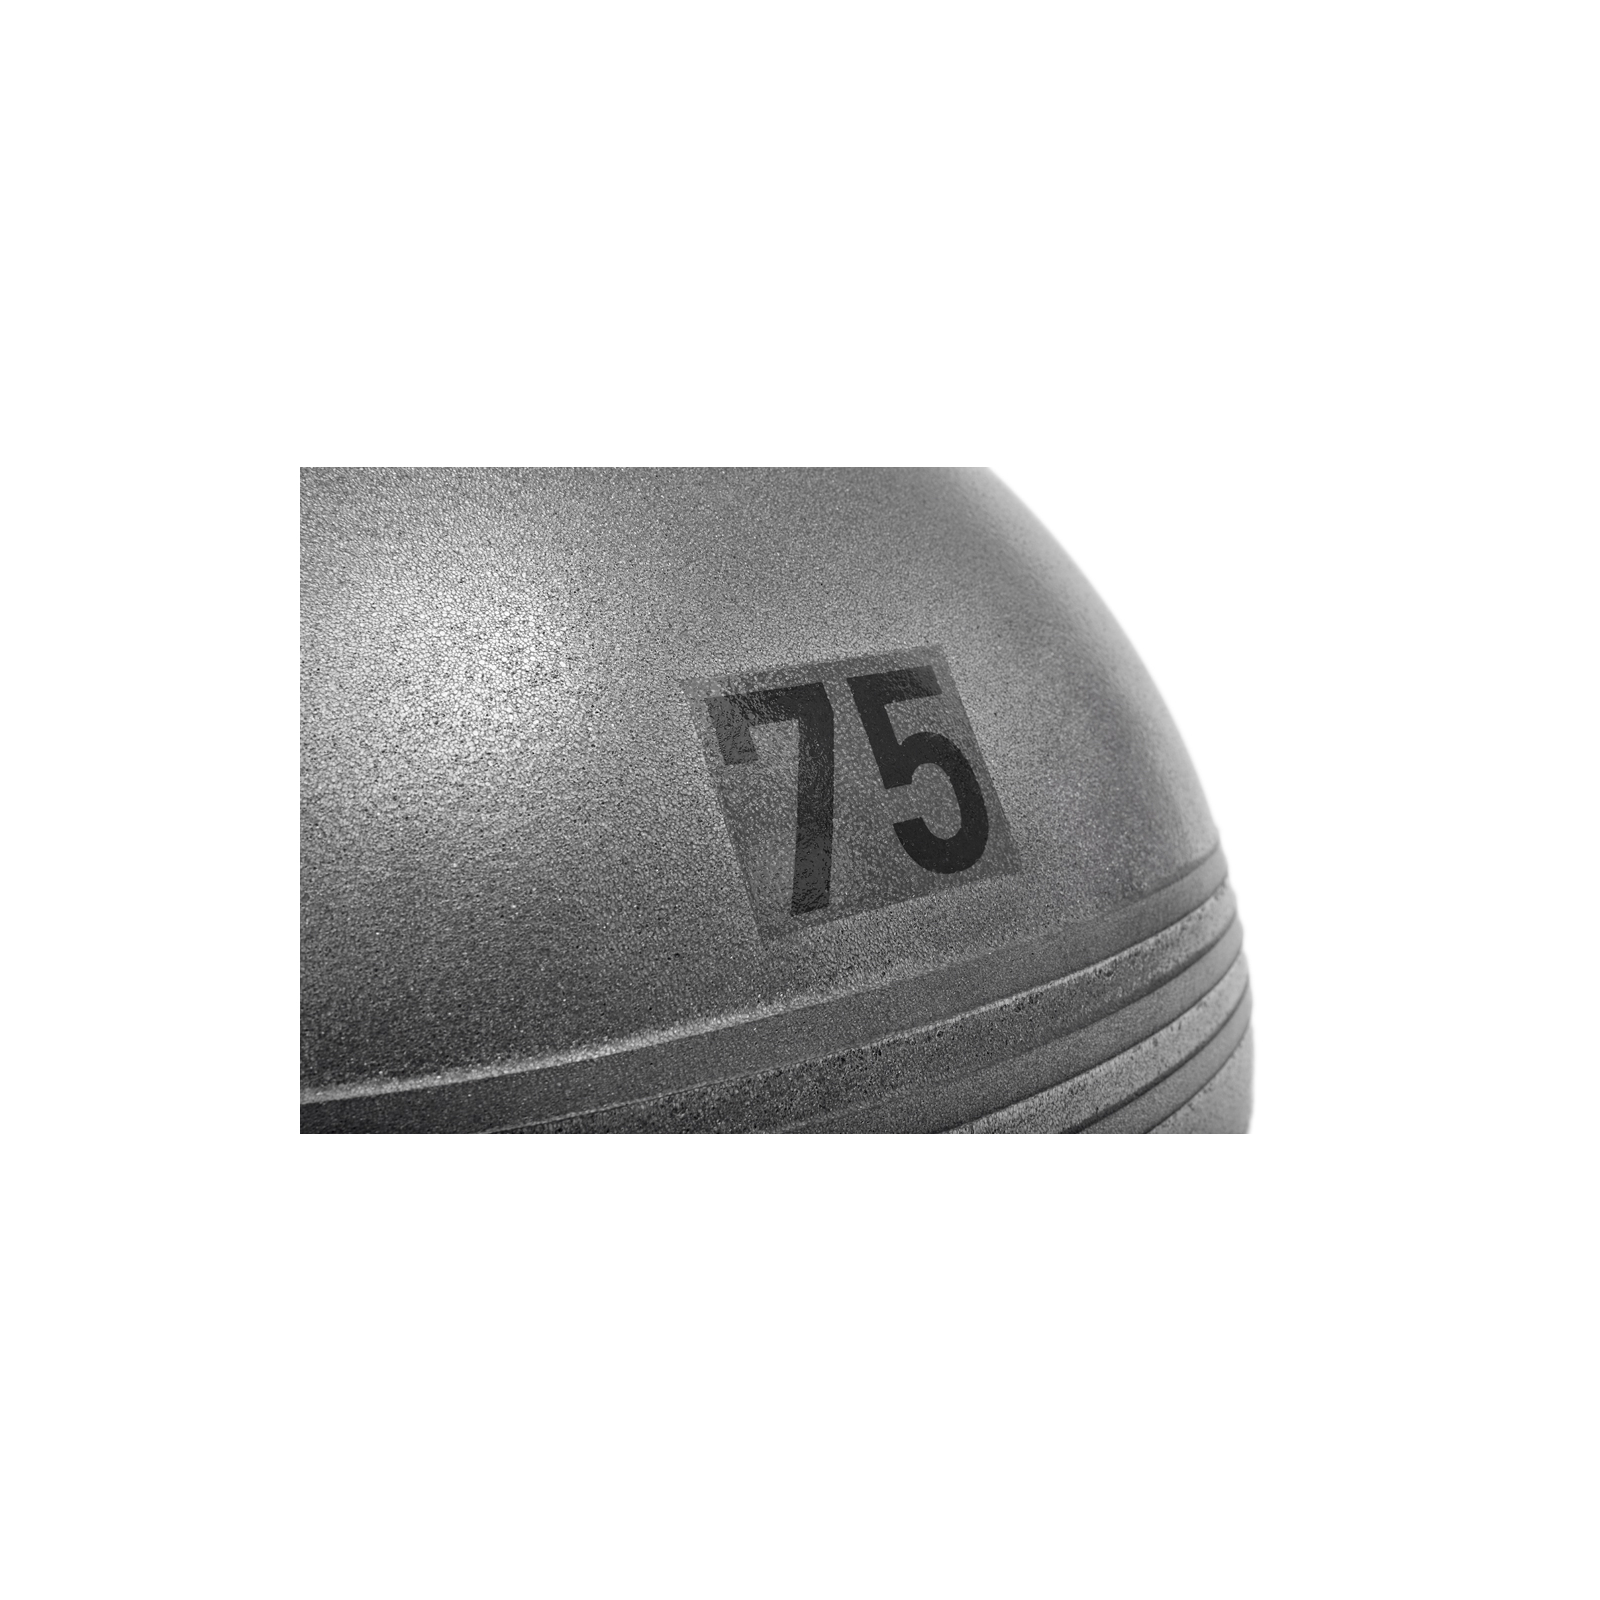 М'яч для фітнесу Adidas Gymball ADBL-11247GR Сірий 75 см (885652008662) зображення 6